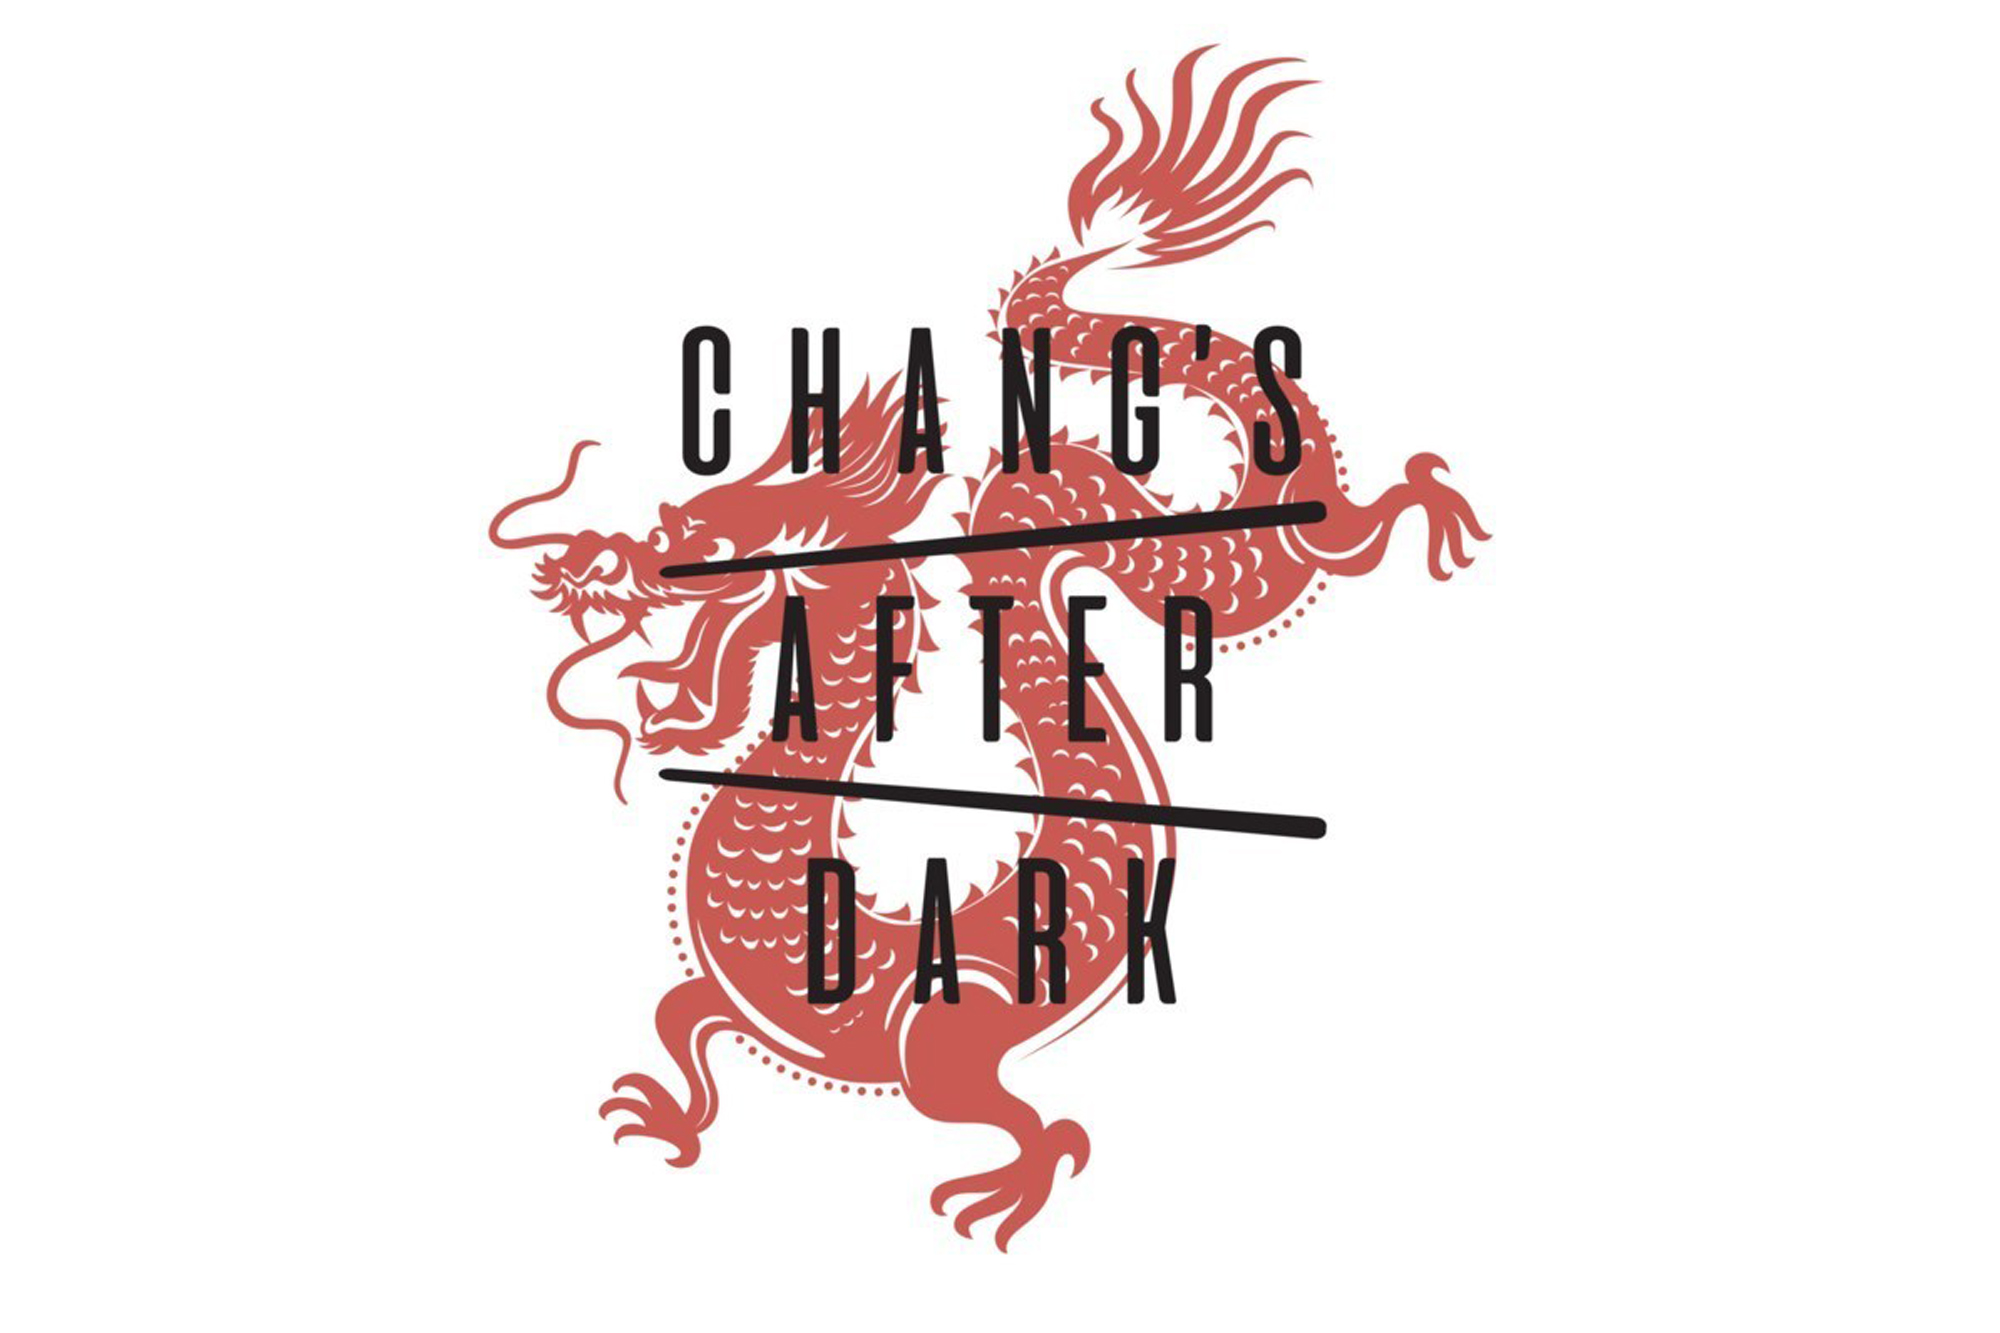 PF Changs Changs After Dark logo